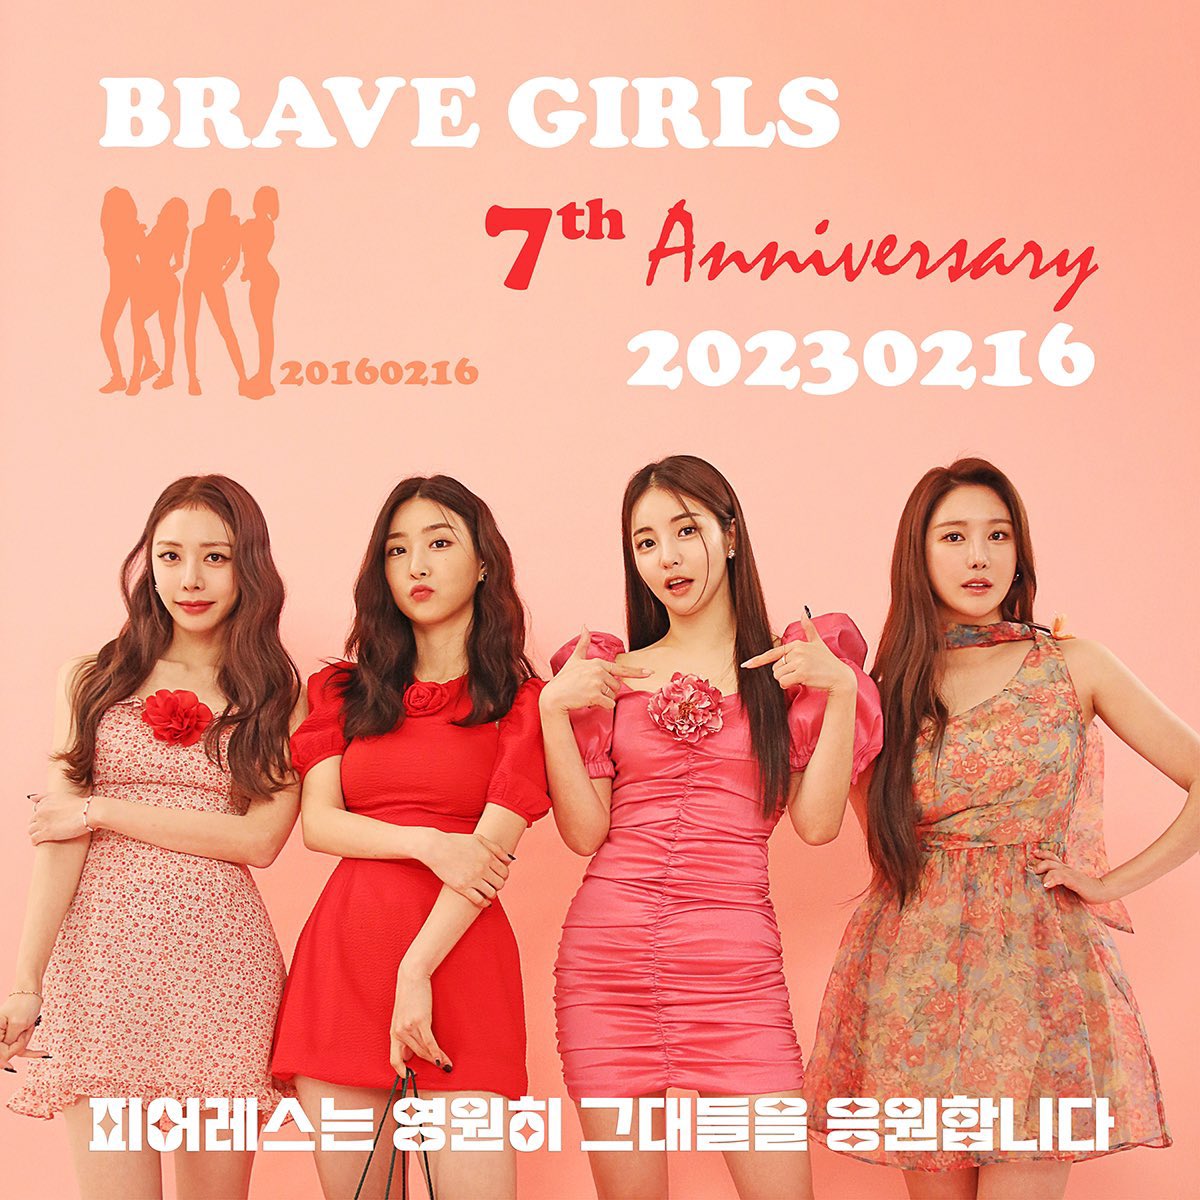 Happy 7th Anniversary to the Icons of Hope, Brave Girls!

#BraveGirls #Fearless
#7th_Anniversary
#Minyoung #Yujeong
#Eunji #Yuna
#AlwaysWithBraveGirls
#Fear7essWithBraveGirls